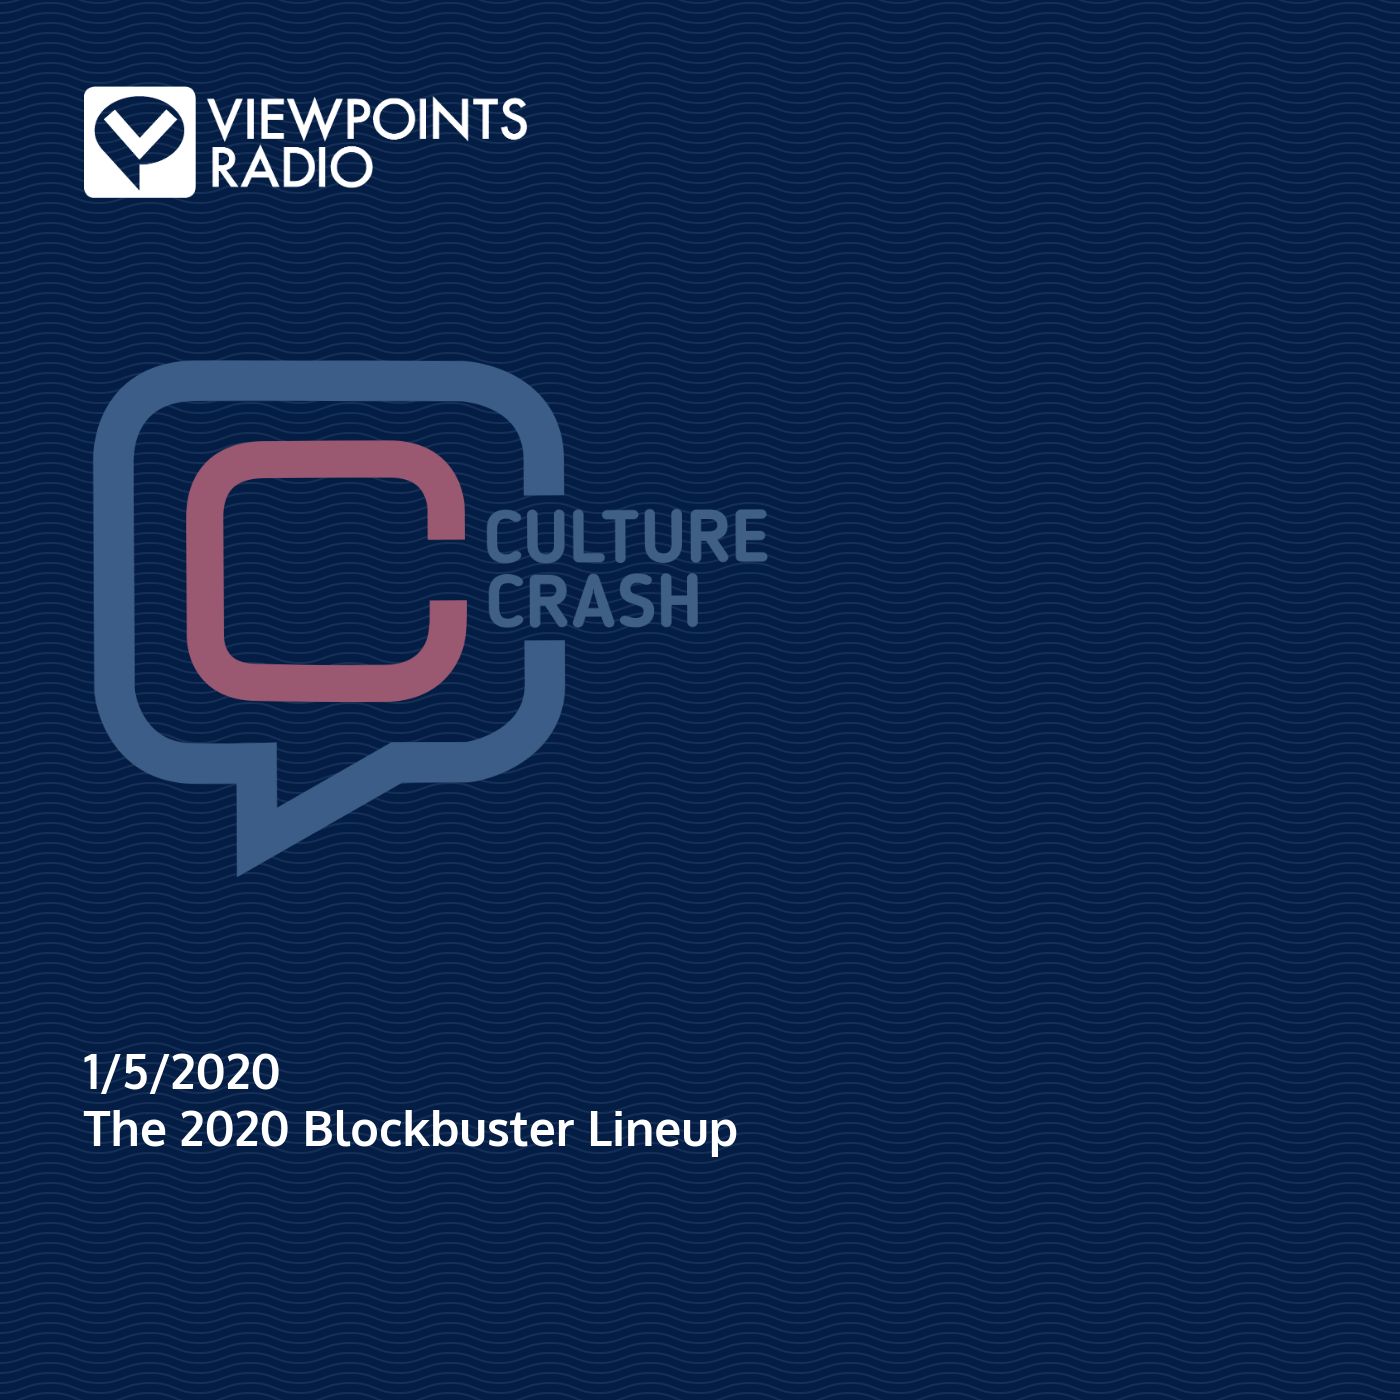 blockbuster movies 2020 - viewpoints radio